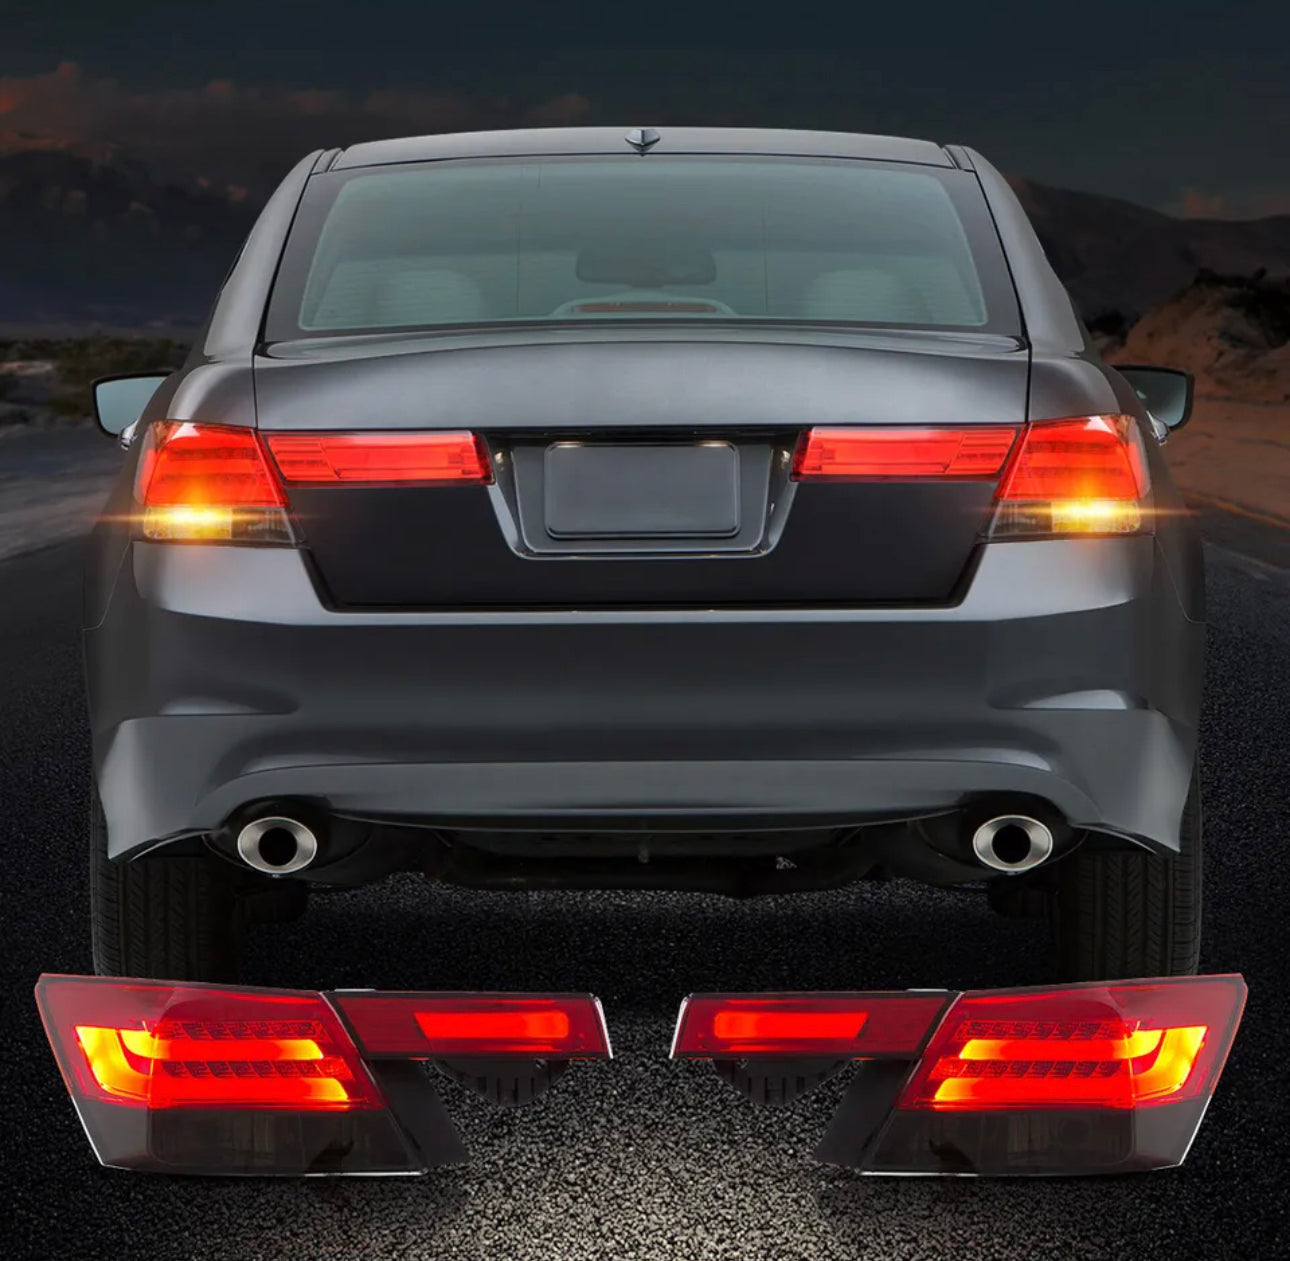 VLAND Red Smoked LED Tail Light For 2008-2013 Honda Accord Lamp Rear Brake Light.